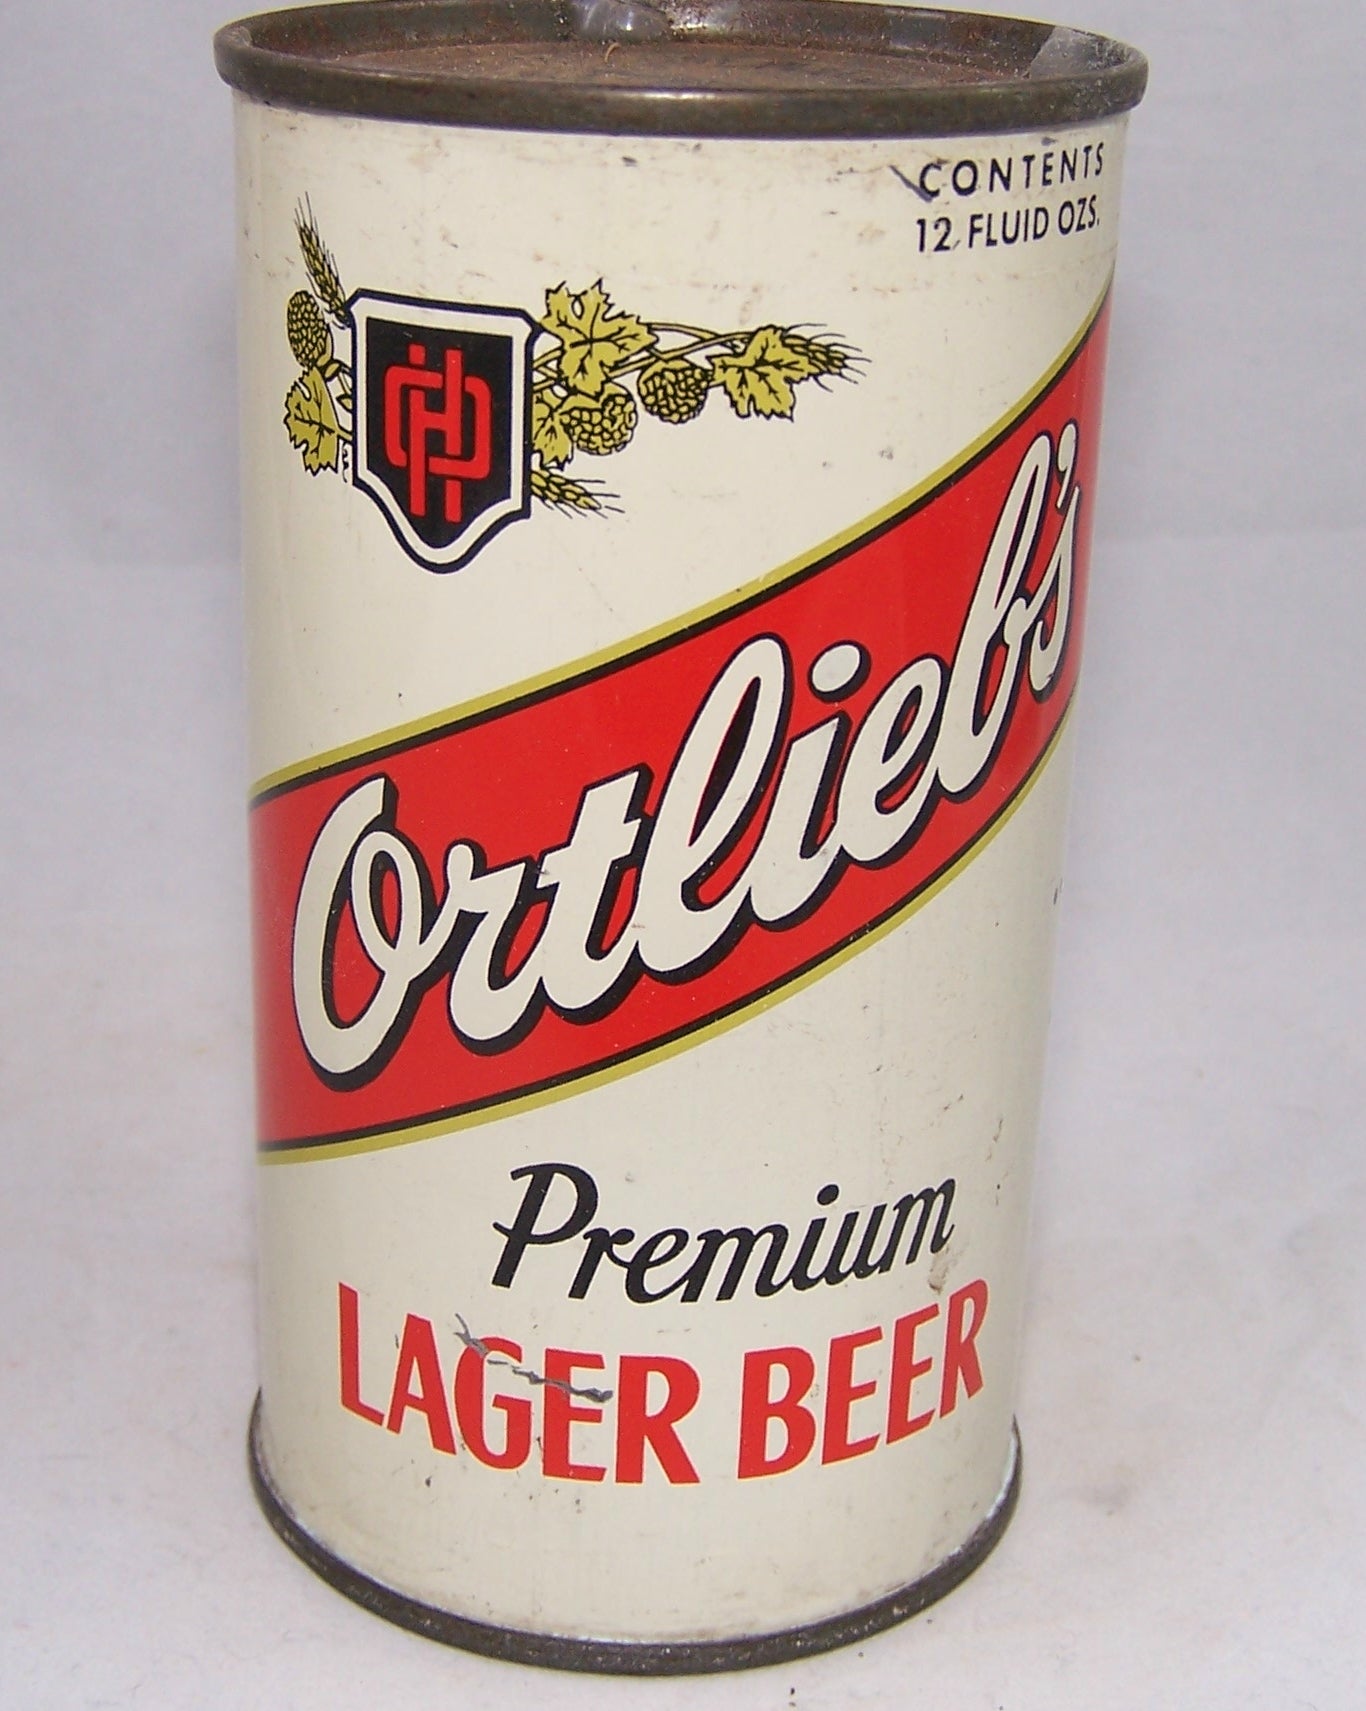 Ortlieb's Premium Lager Beer, USBC 109-18, Grade 1/1- Sold on 09/01/17